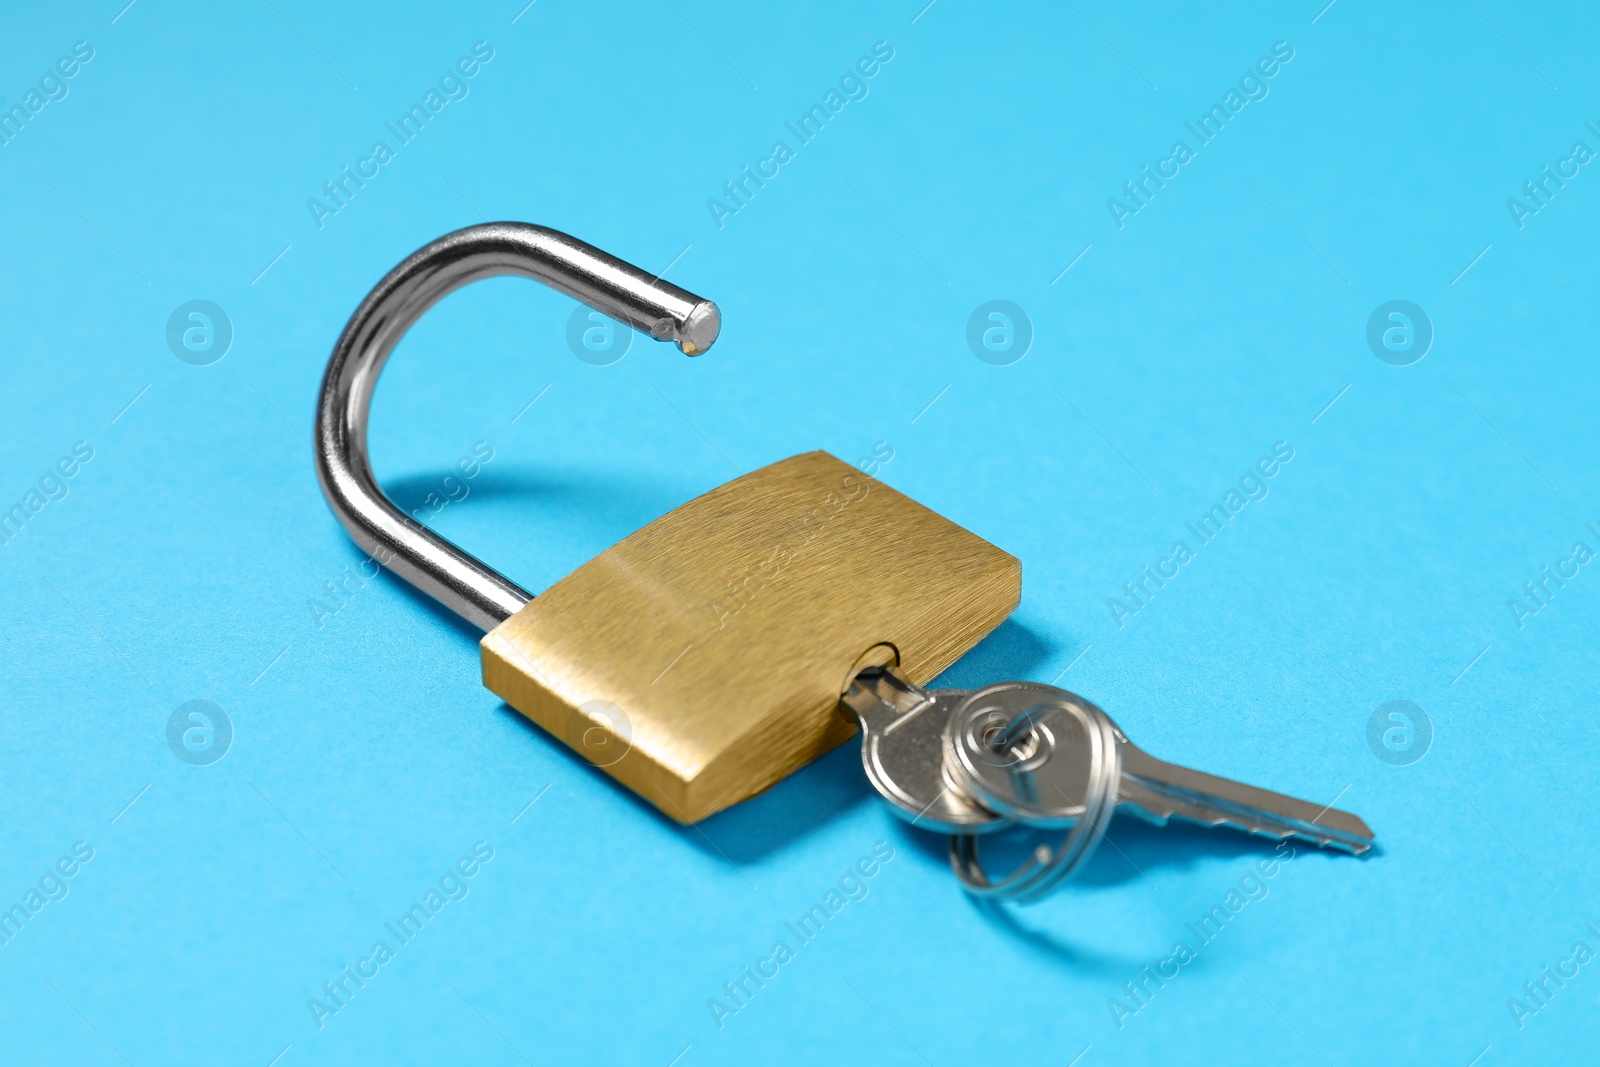 Photo of Steel padlock with keys on light blue background, closeup